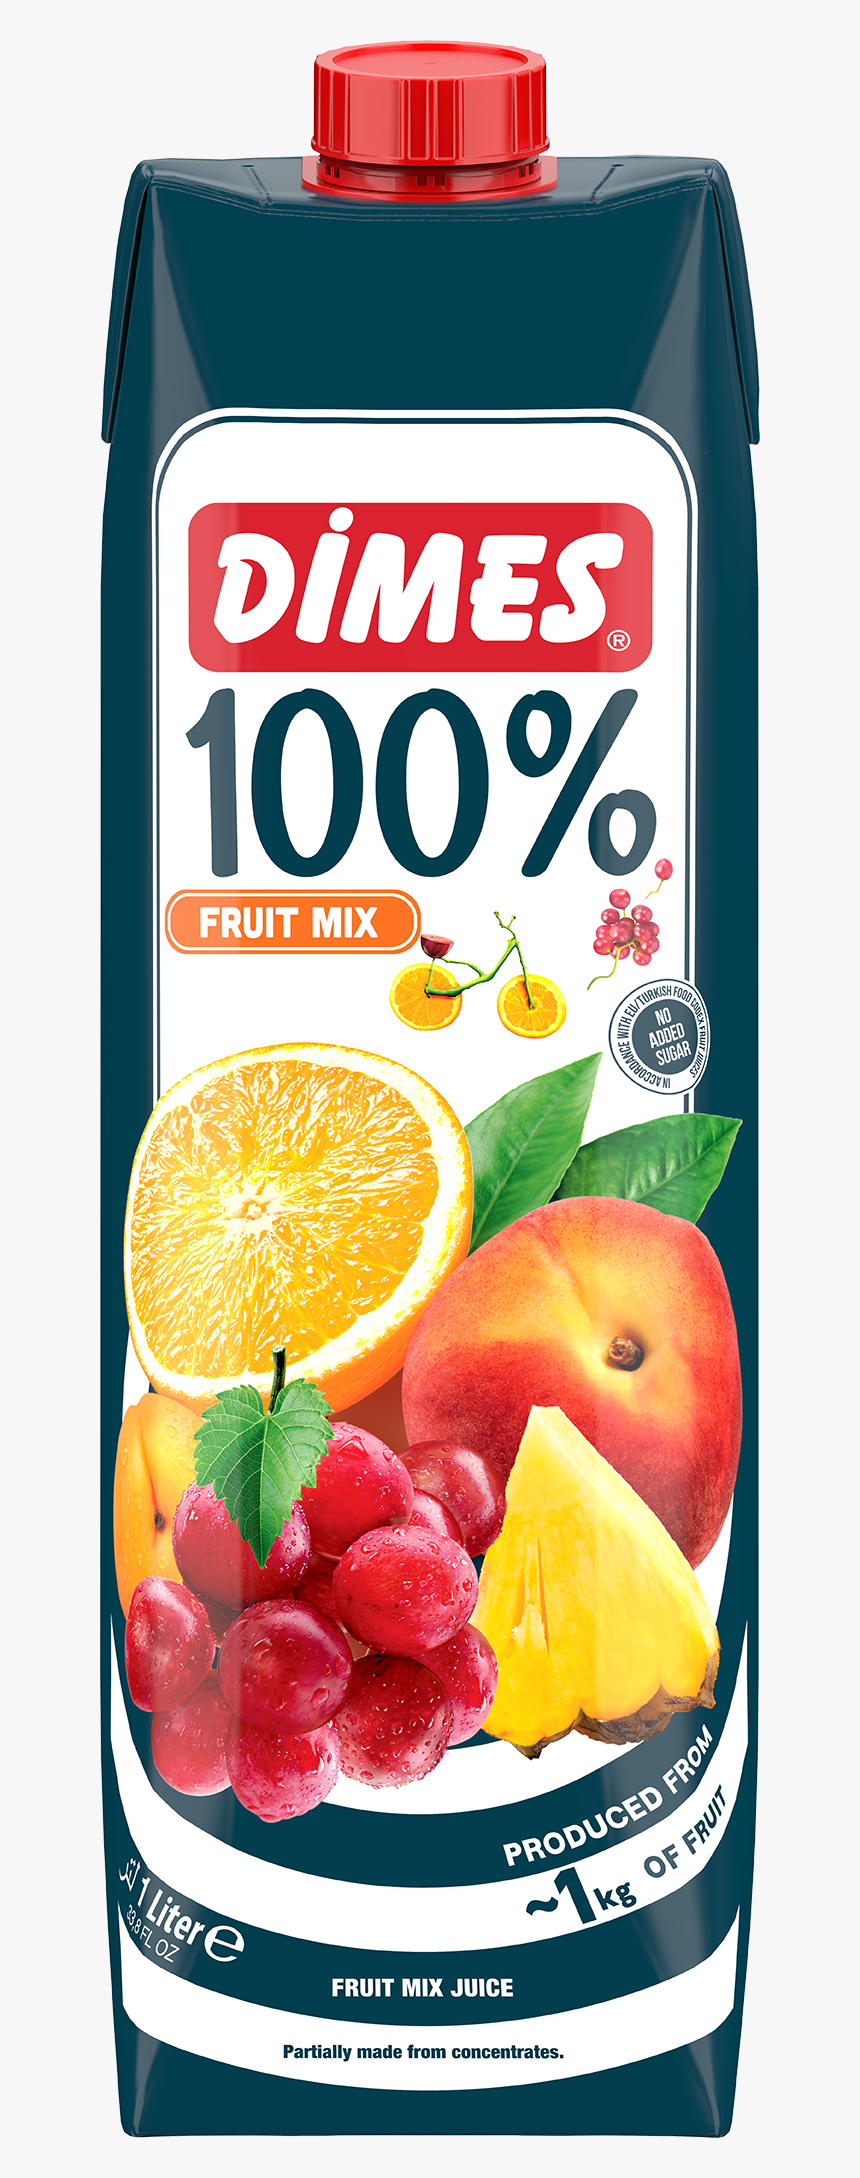 Di̇mes Premium 100% Mix Fruits - Dimes Premium Apple Juice Ingredients, HD Png Download, Free Download